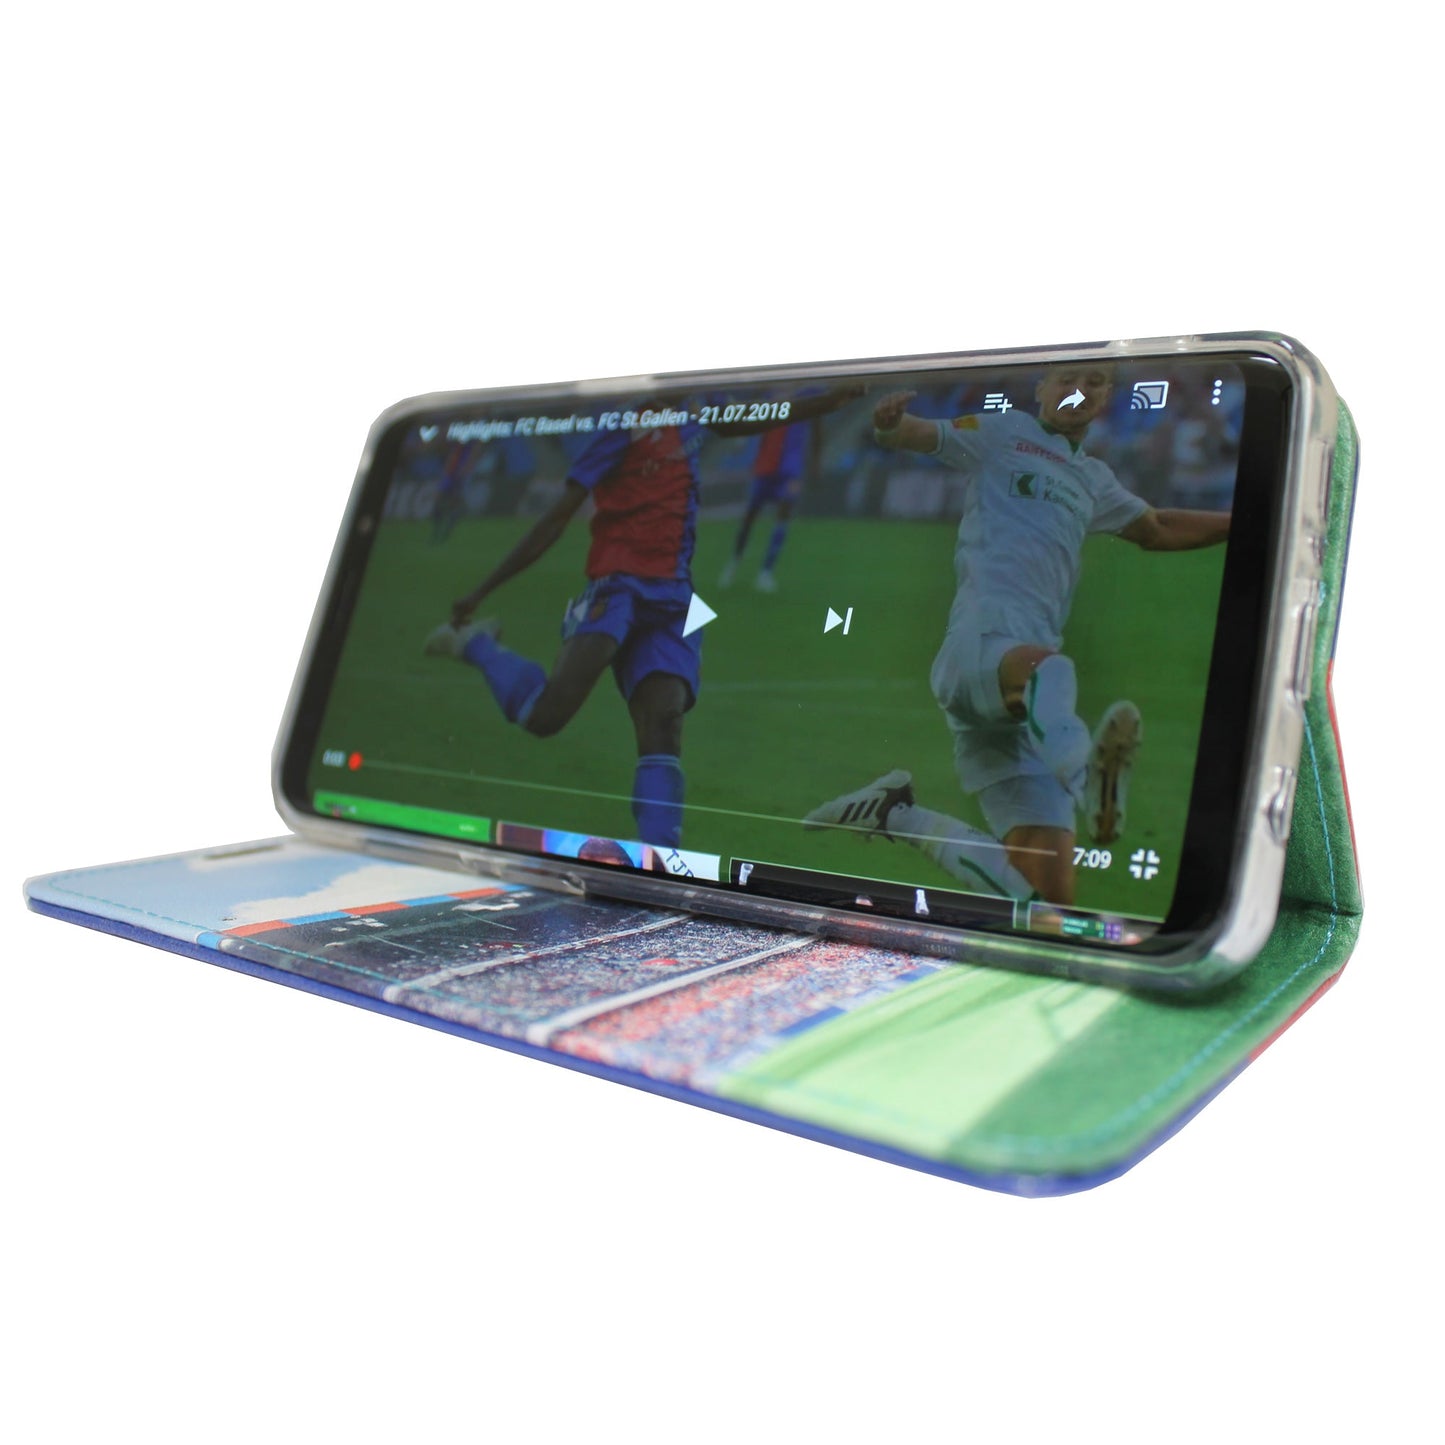 FCB rot / blau Panorama Case für iPhone XS Max